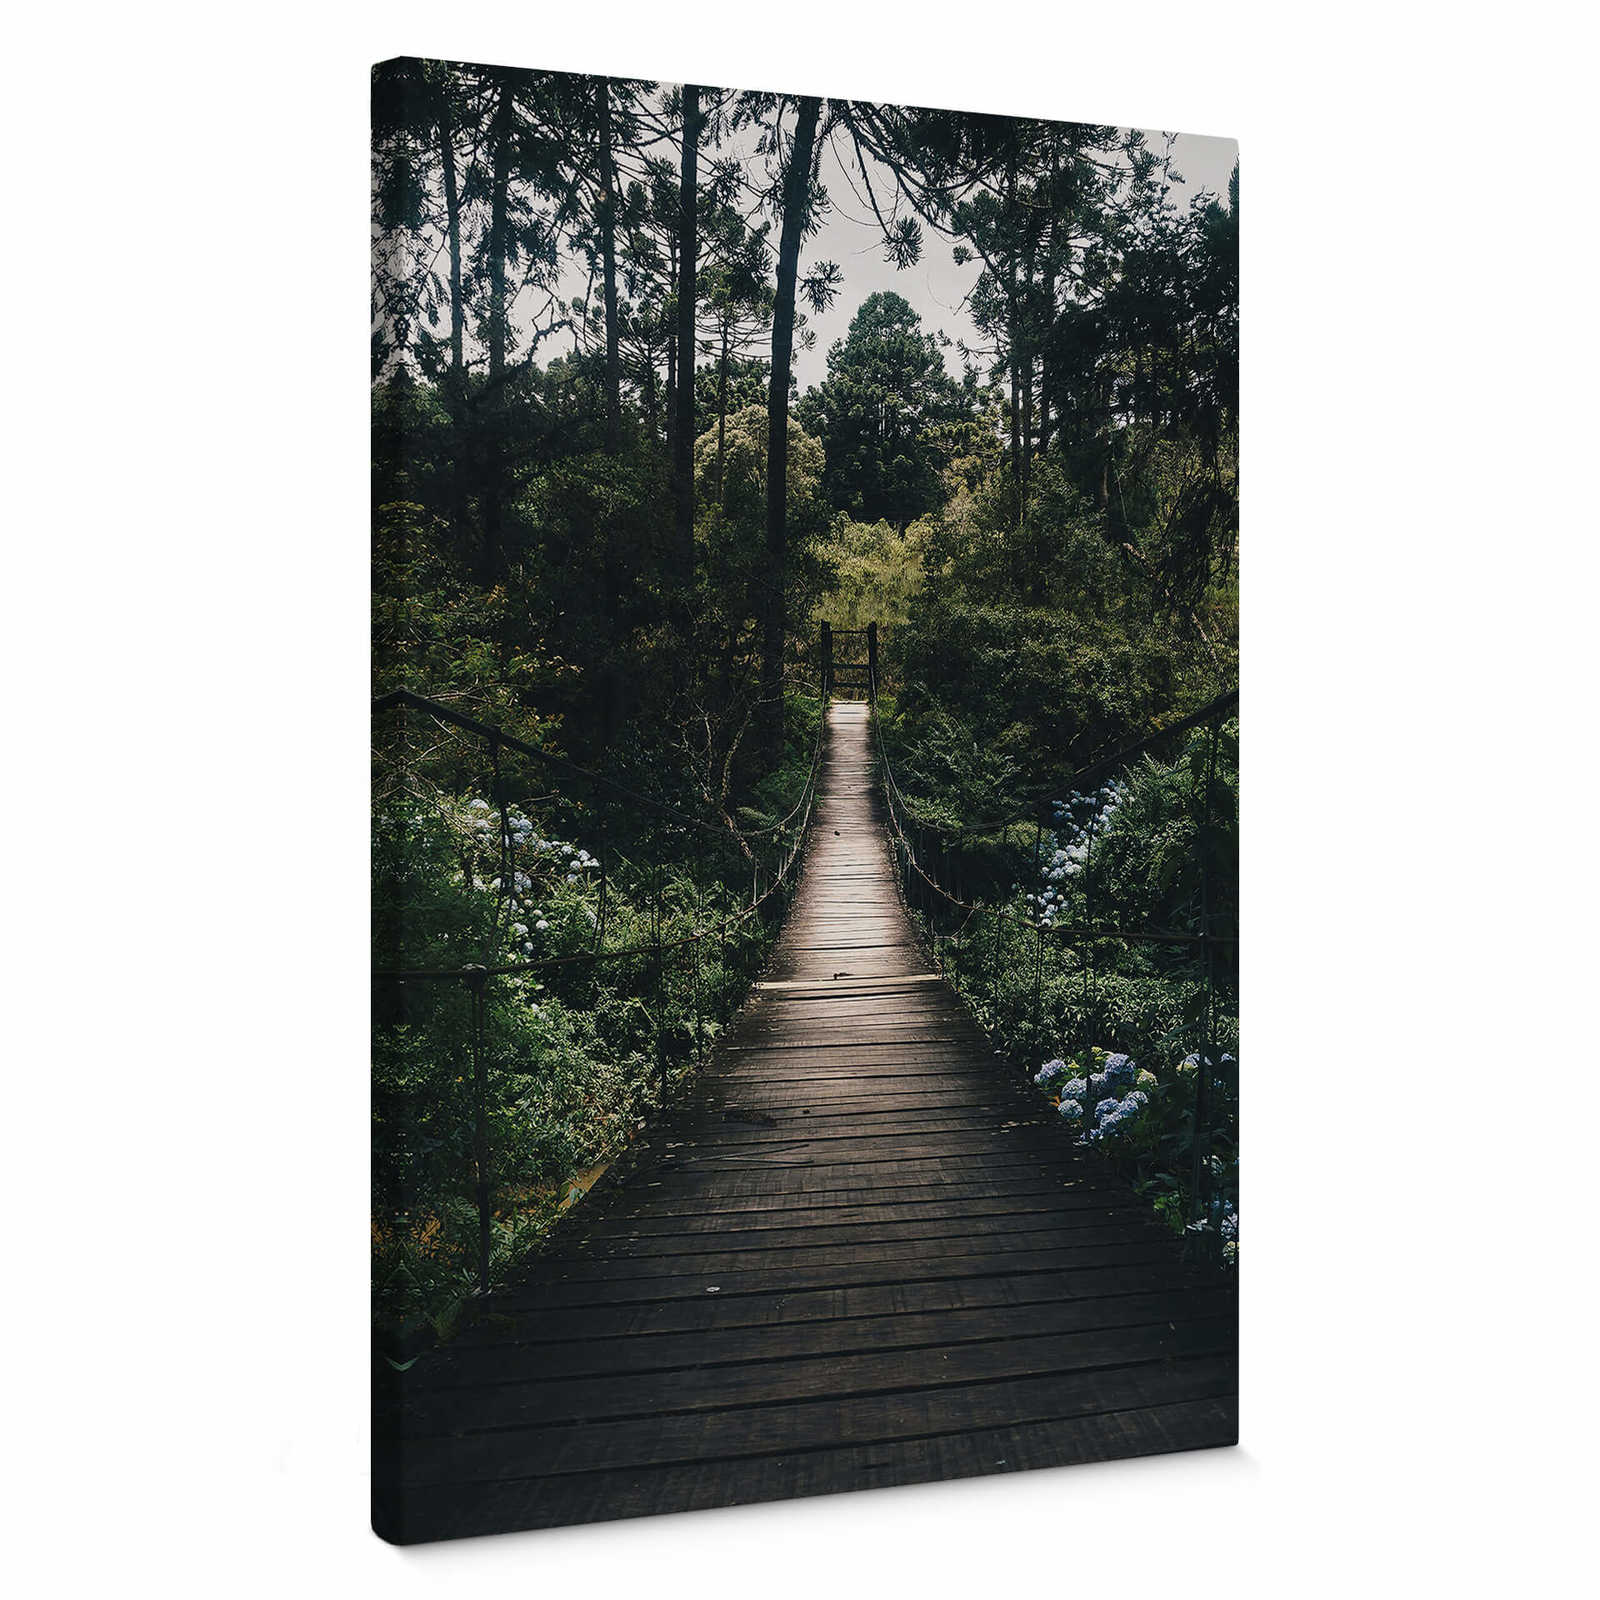         Leinwandbild Hängebrücke im Wald im Sommer – 0,50 m x 0,70 m
    